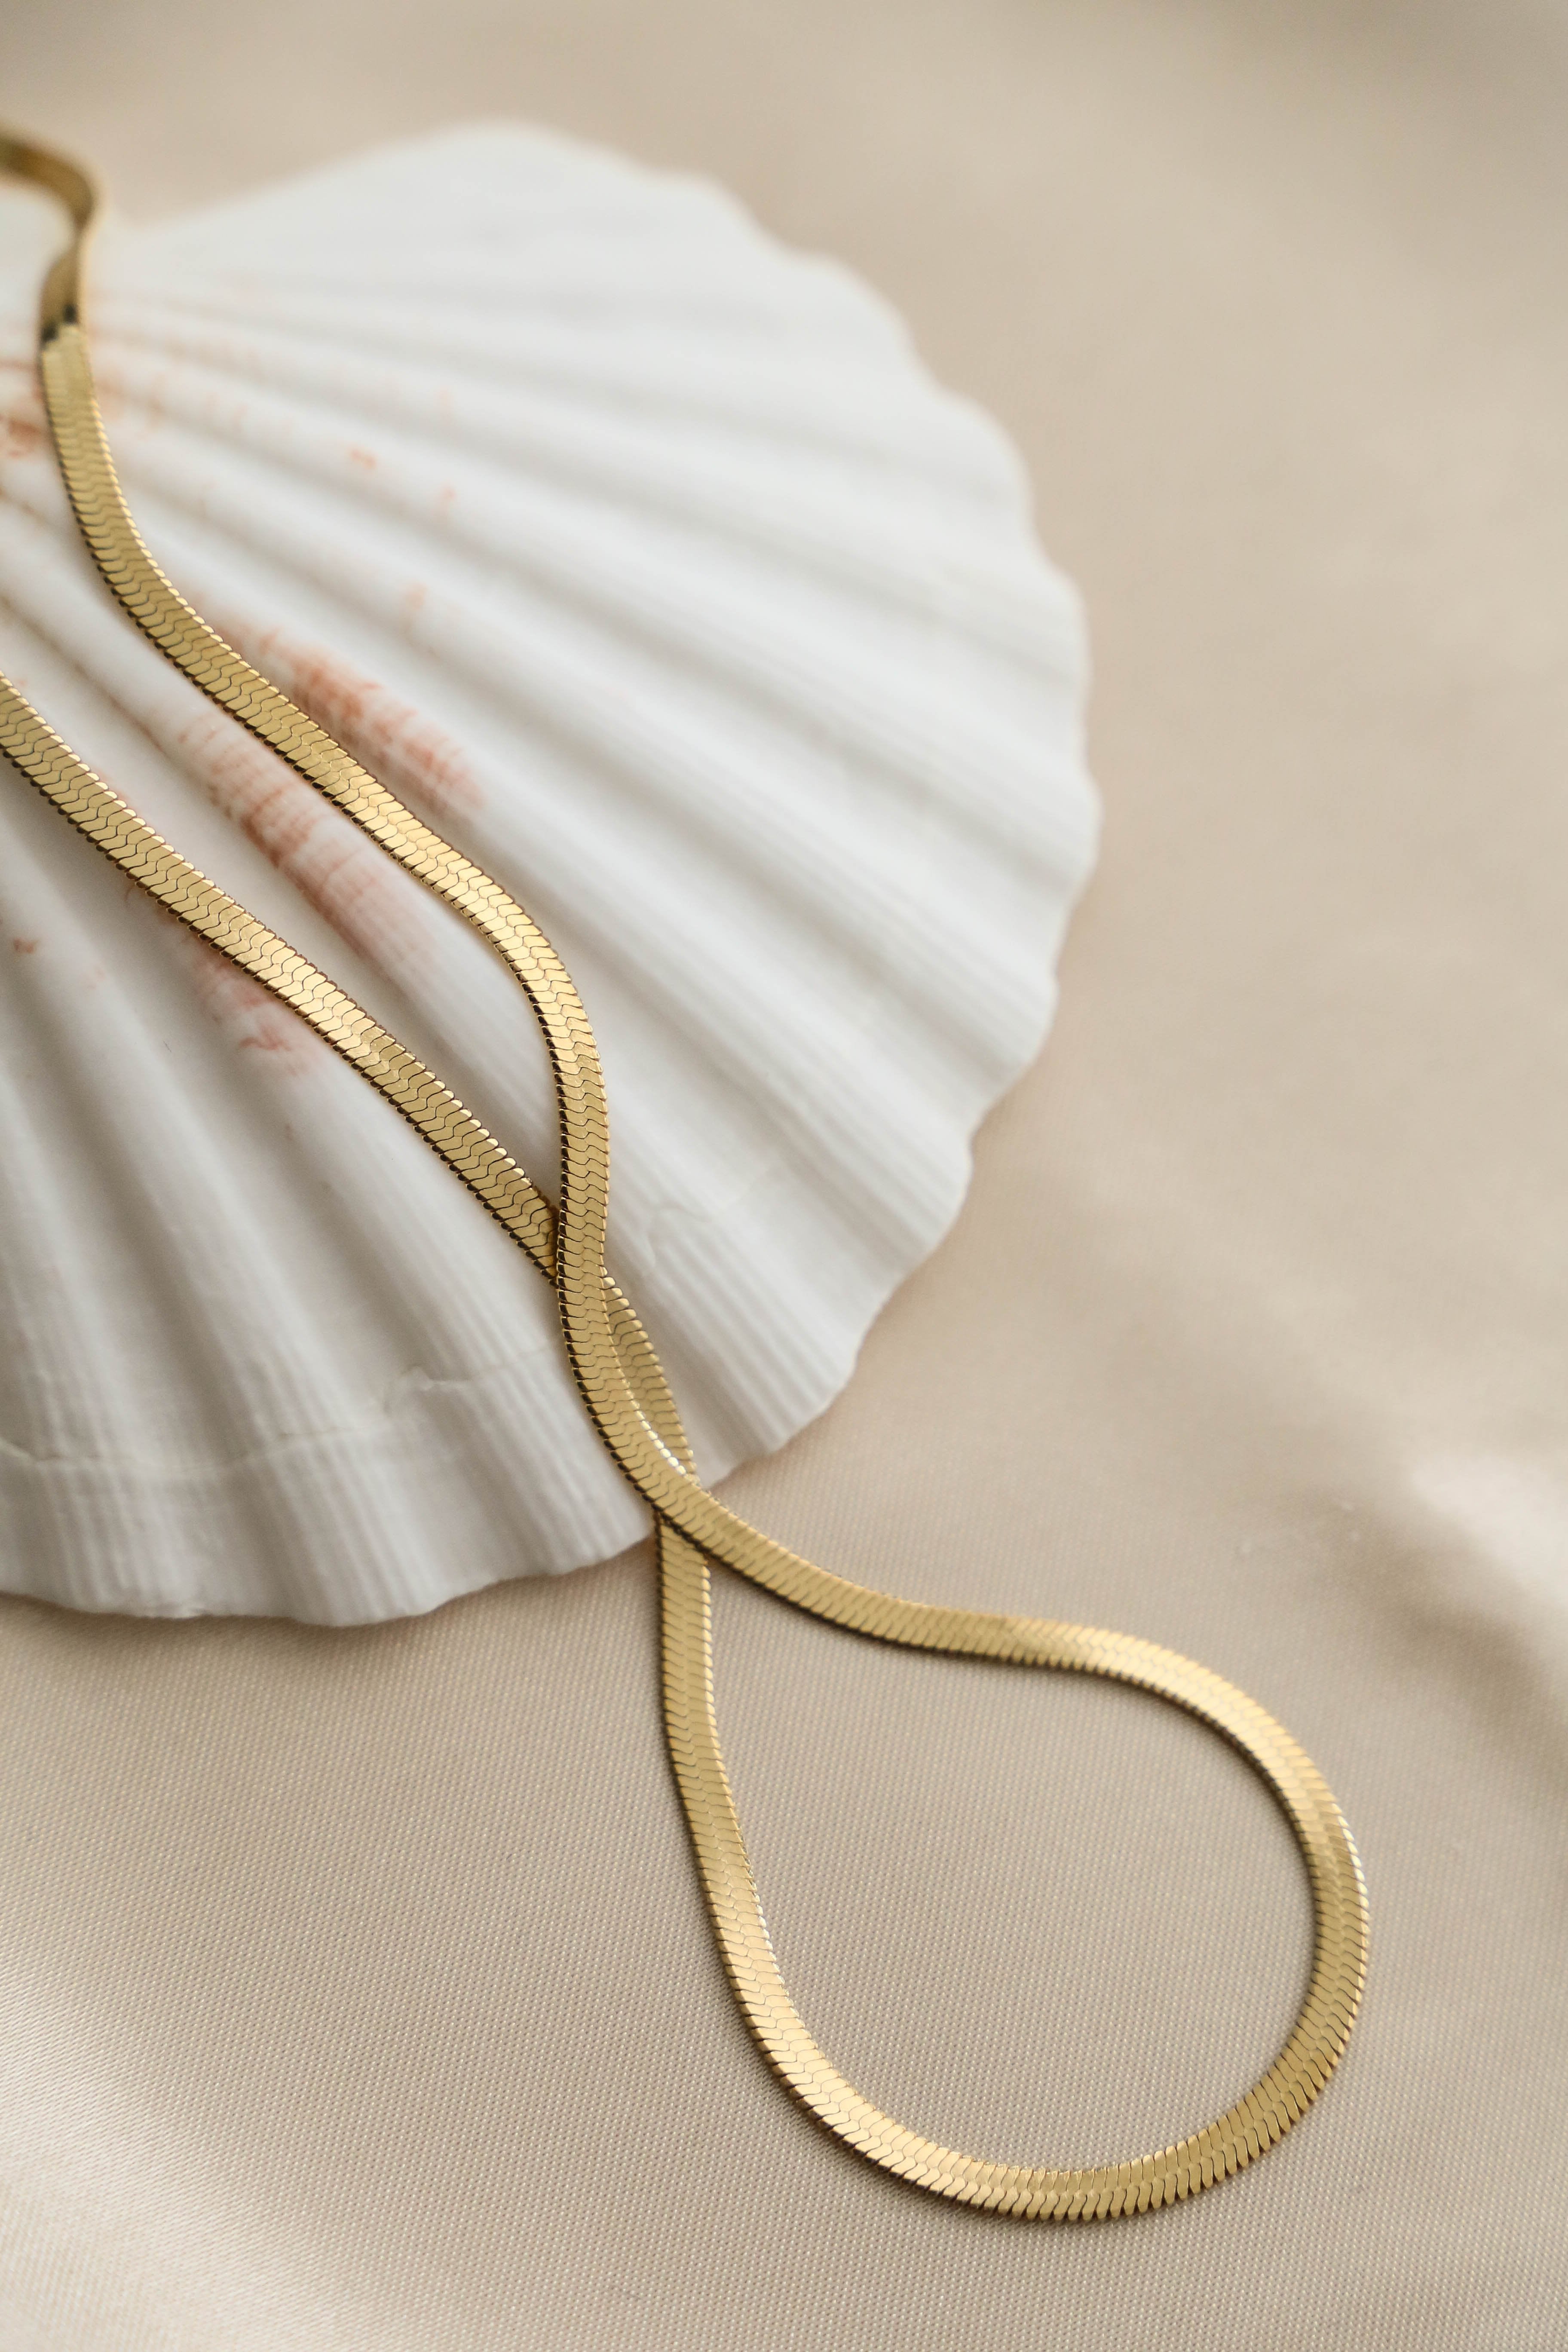 Harper Herringbone Necklace - Boutique Minimaliste has waterproof, durable, elegant and vintage inspired jewelry